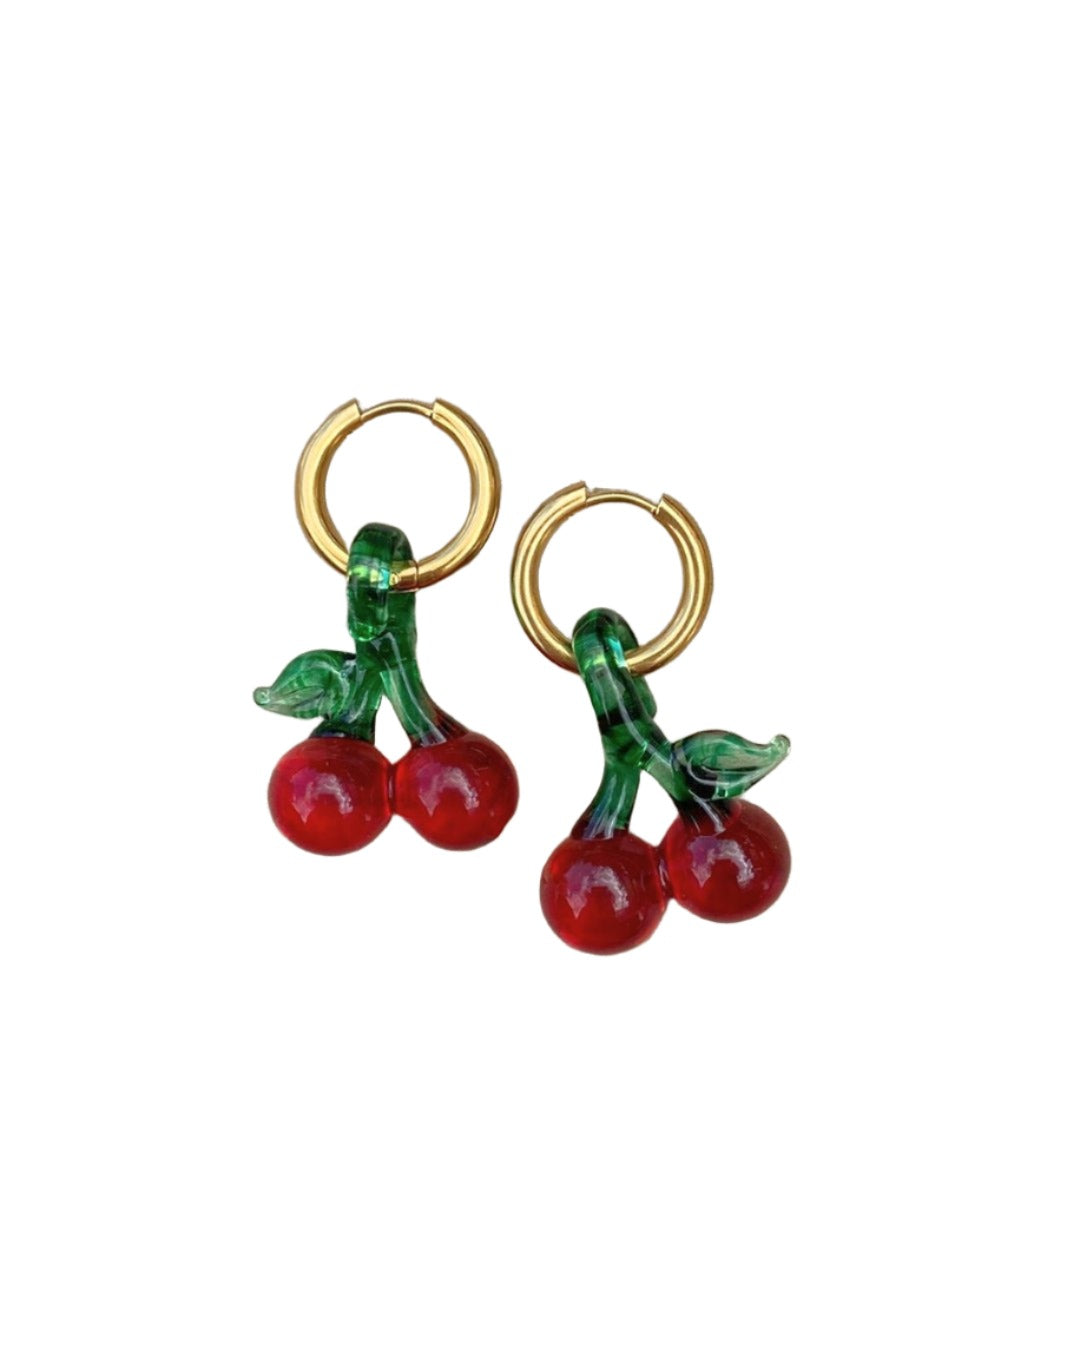 Handmade recycled glass earrings - cherry earrings - Suplais